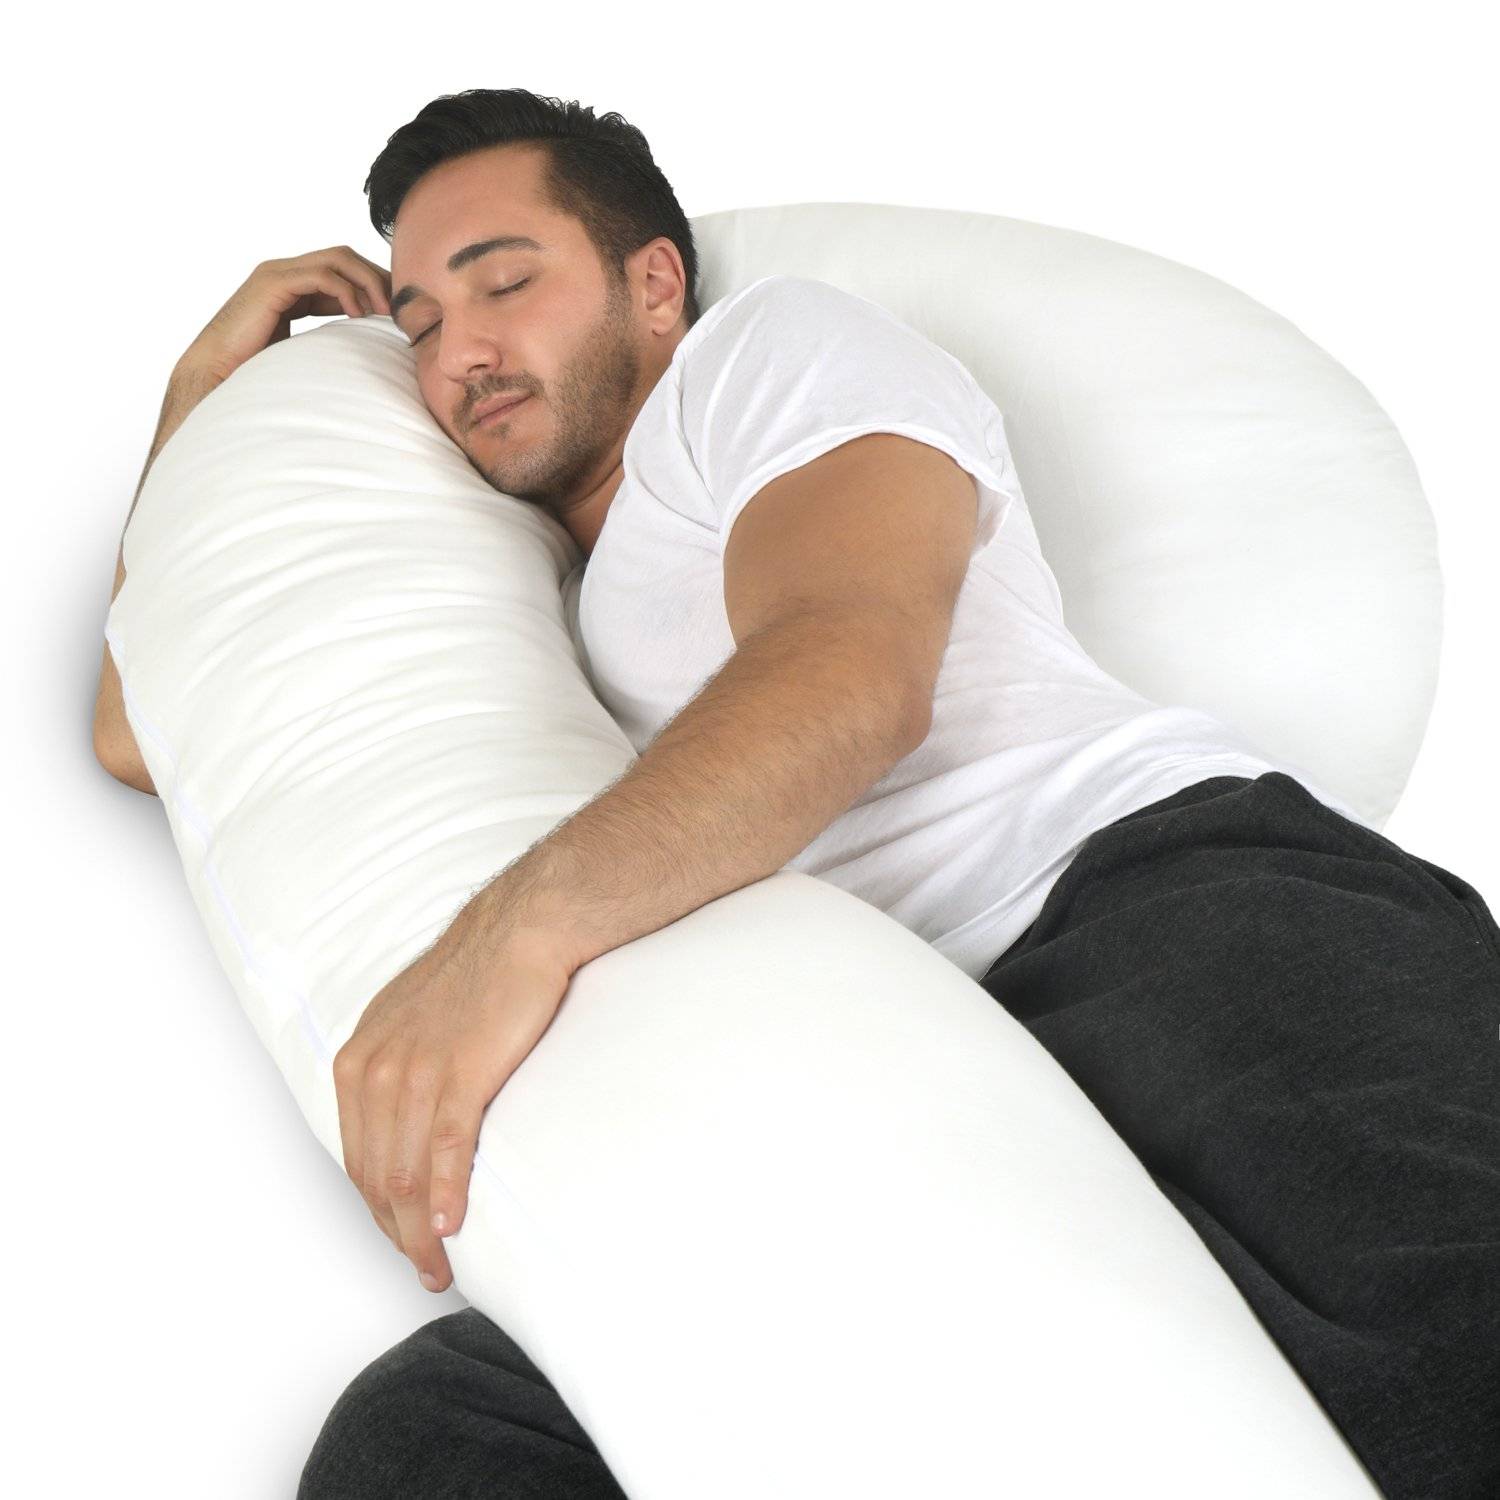 man sleeping with u-shaped body pillow